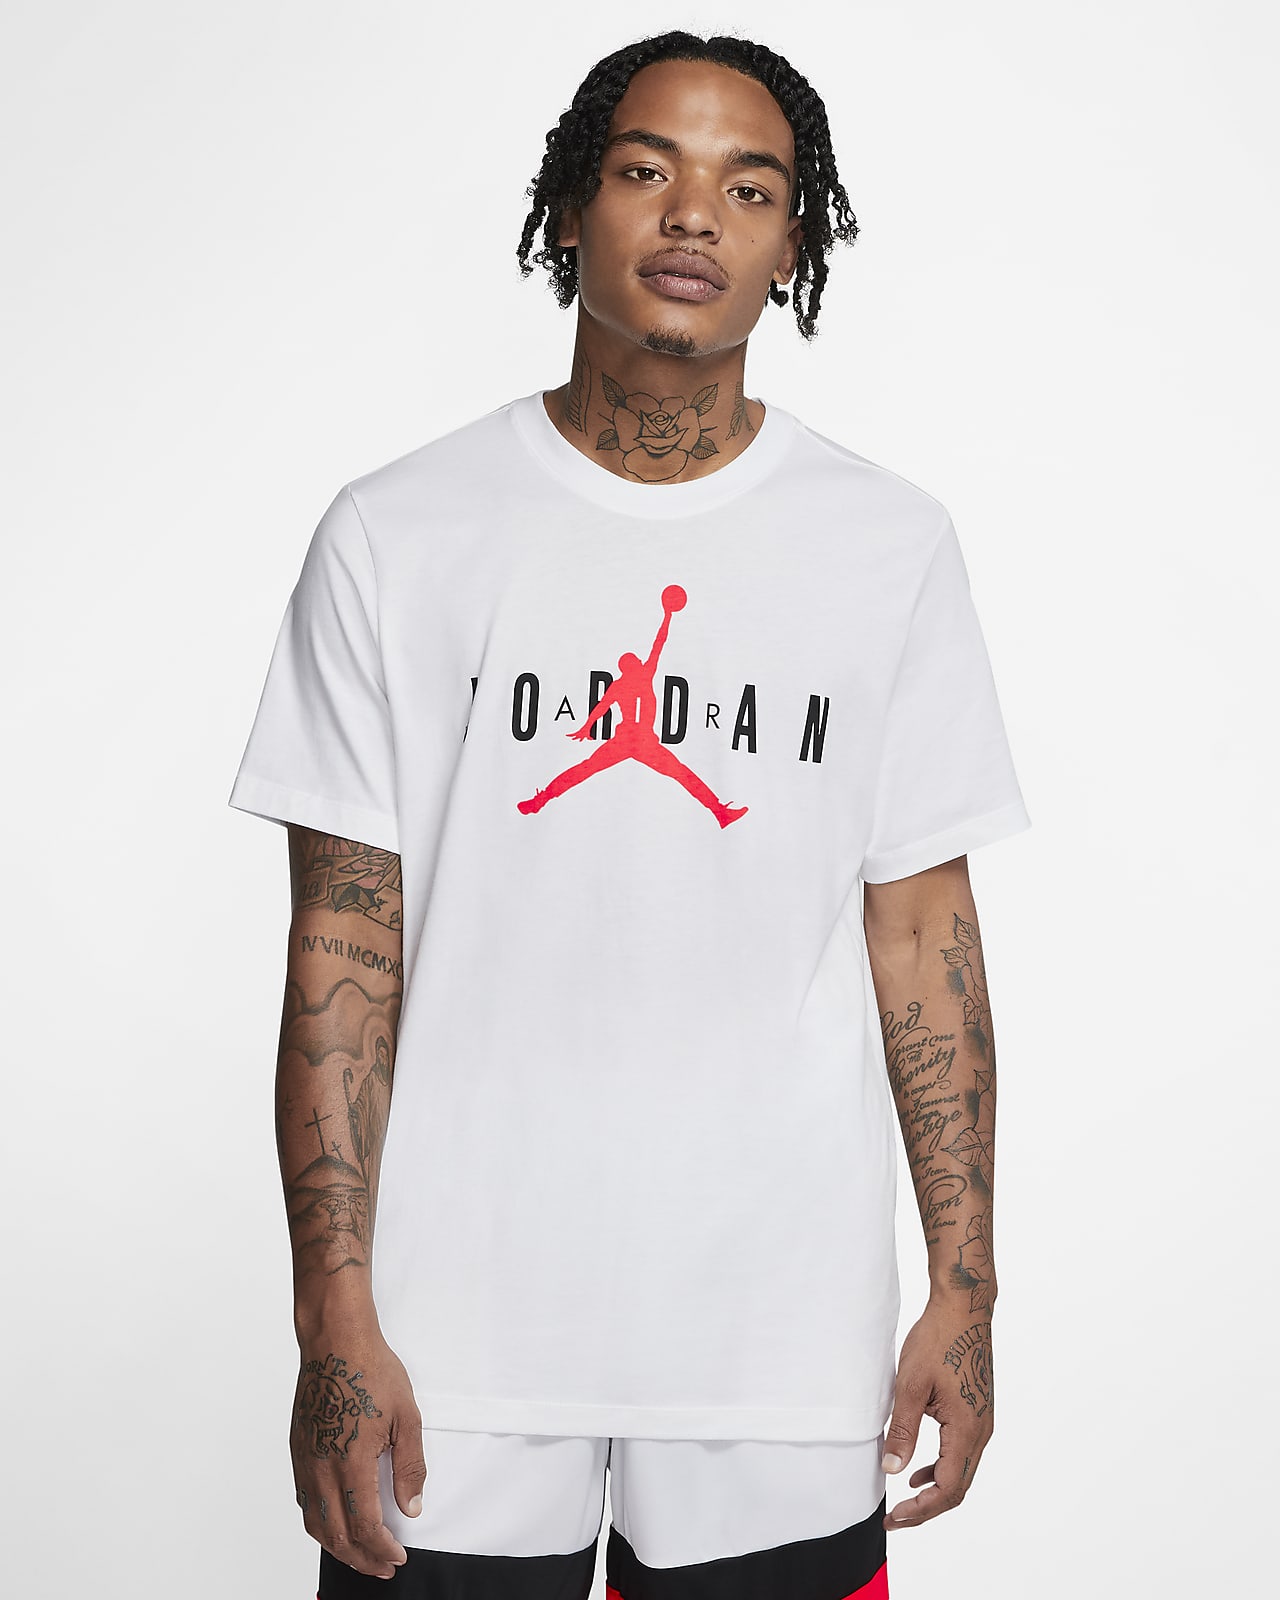 Jordan tシャツ